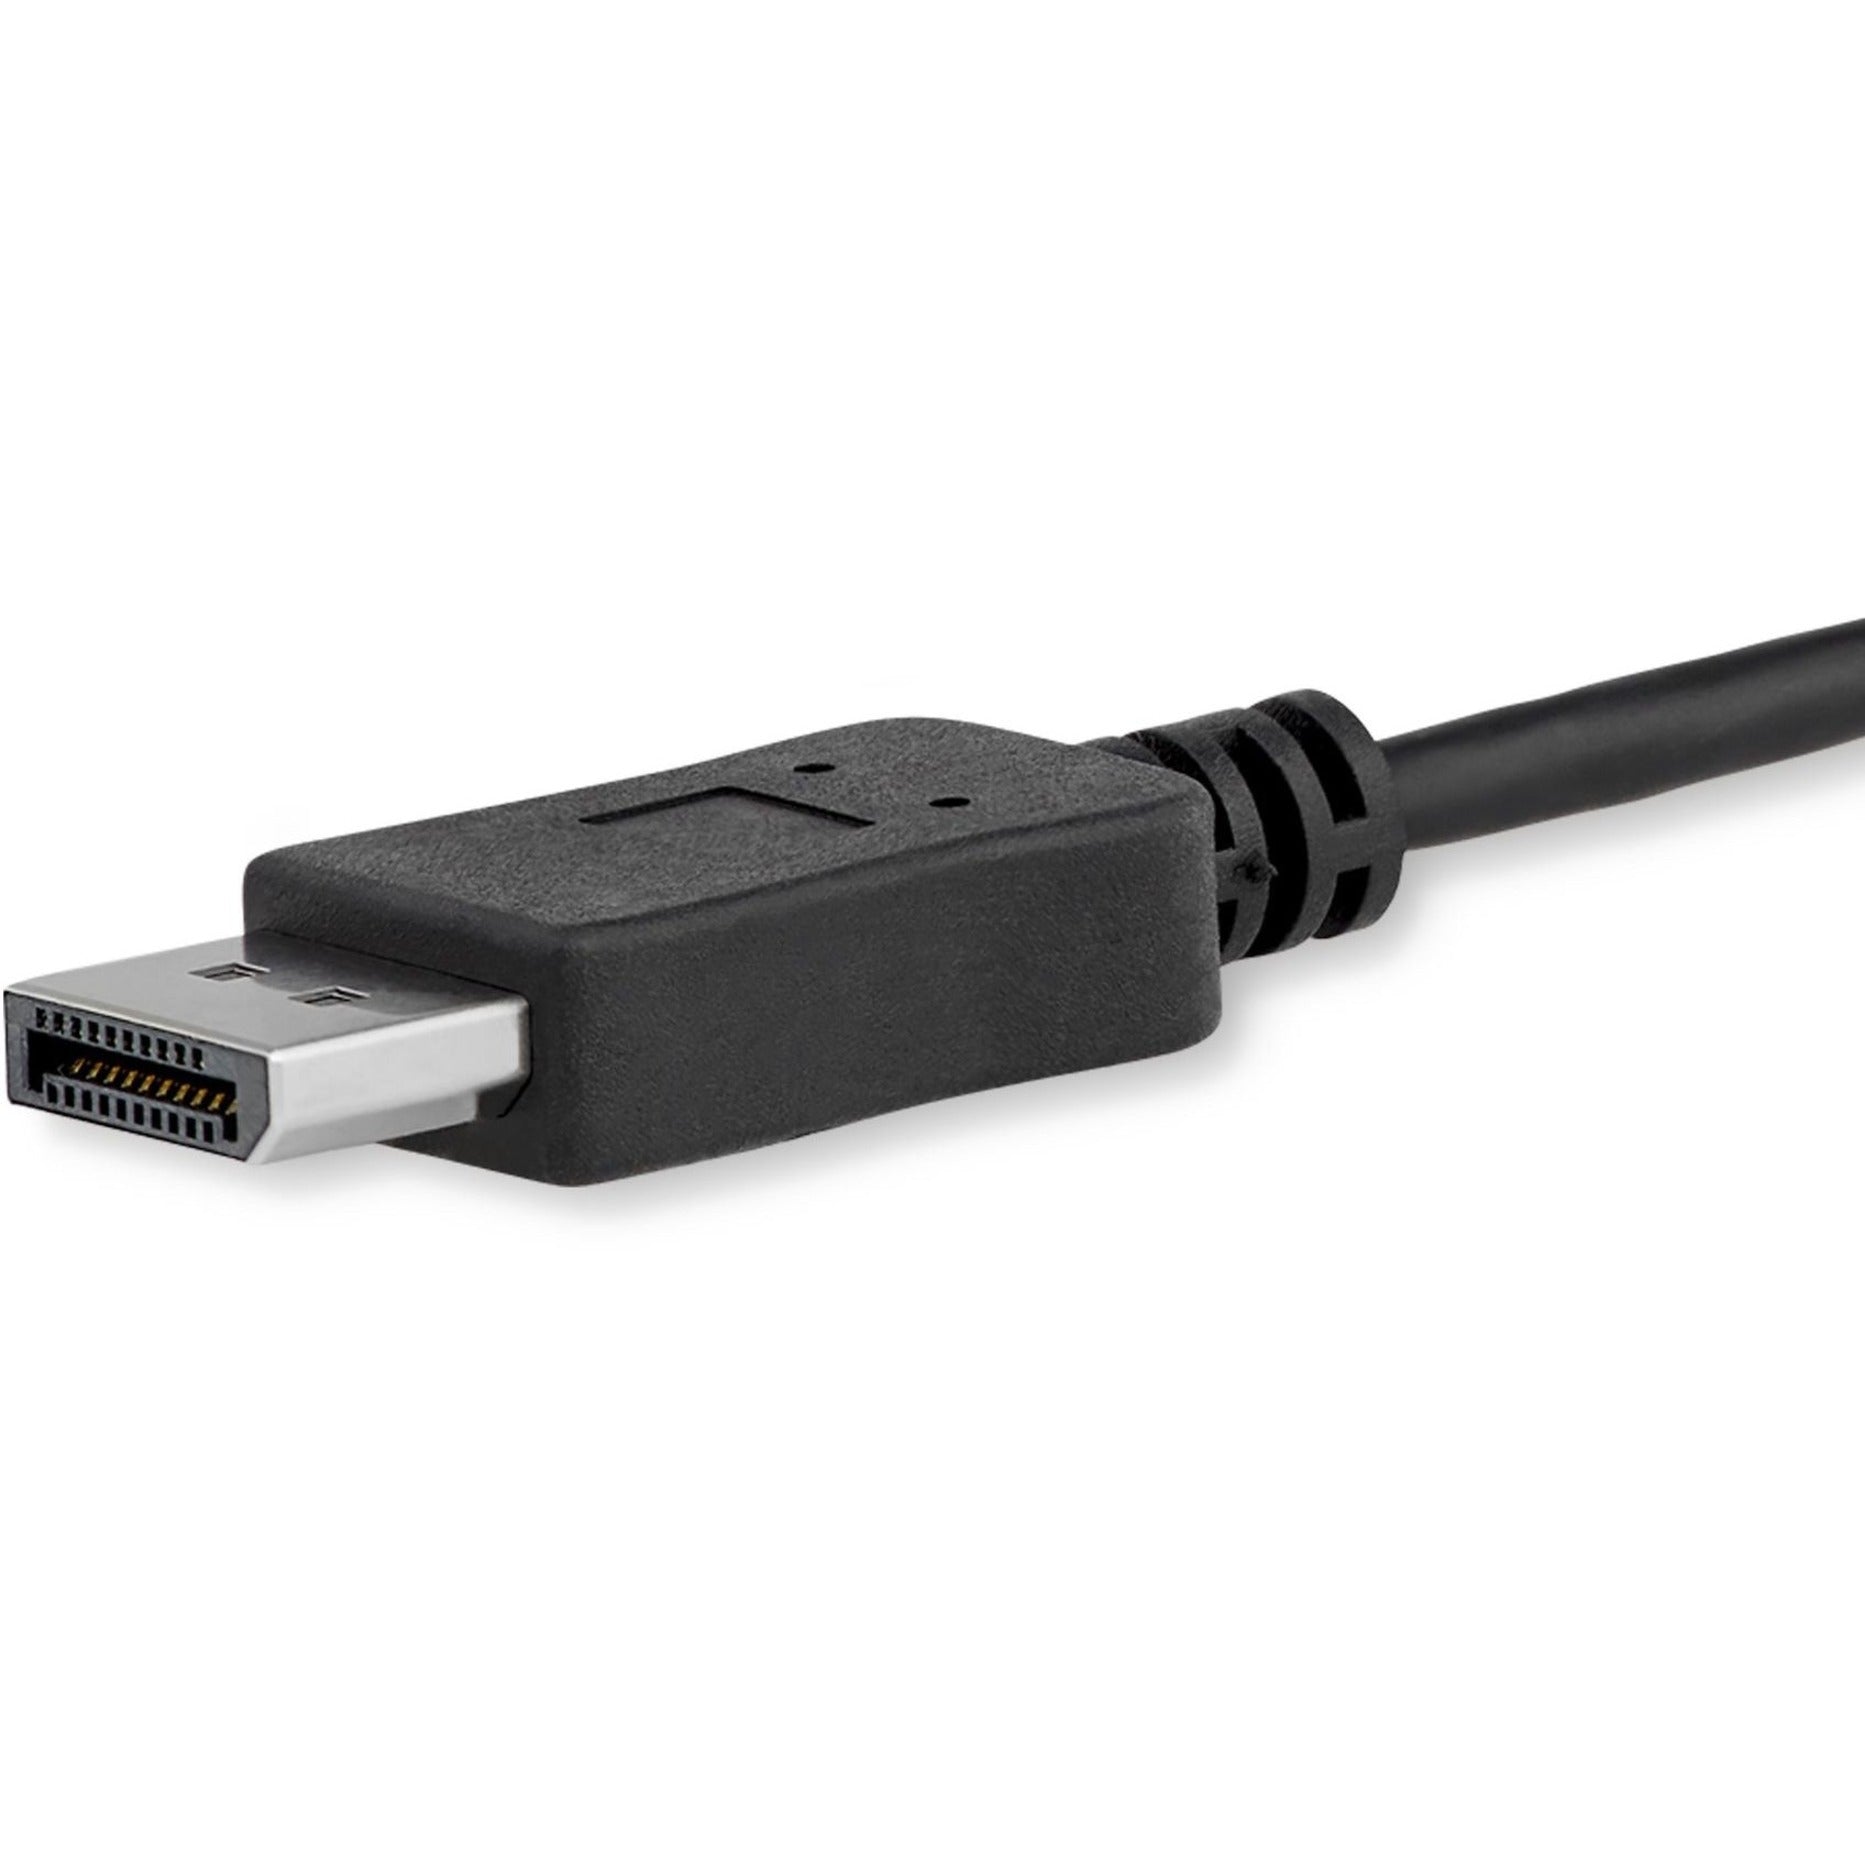 StarTech.com CDP2DPMM6B USB-C to DisplayPort Adapter Cable - USB Type-C to DP Converter, 6ft 4K 60Hz Black